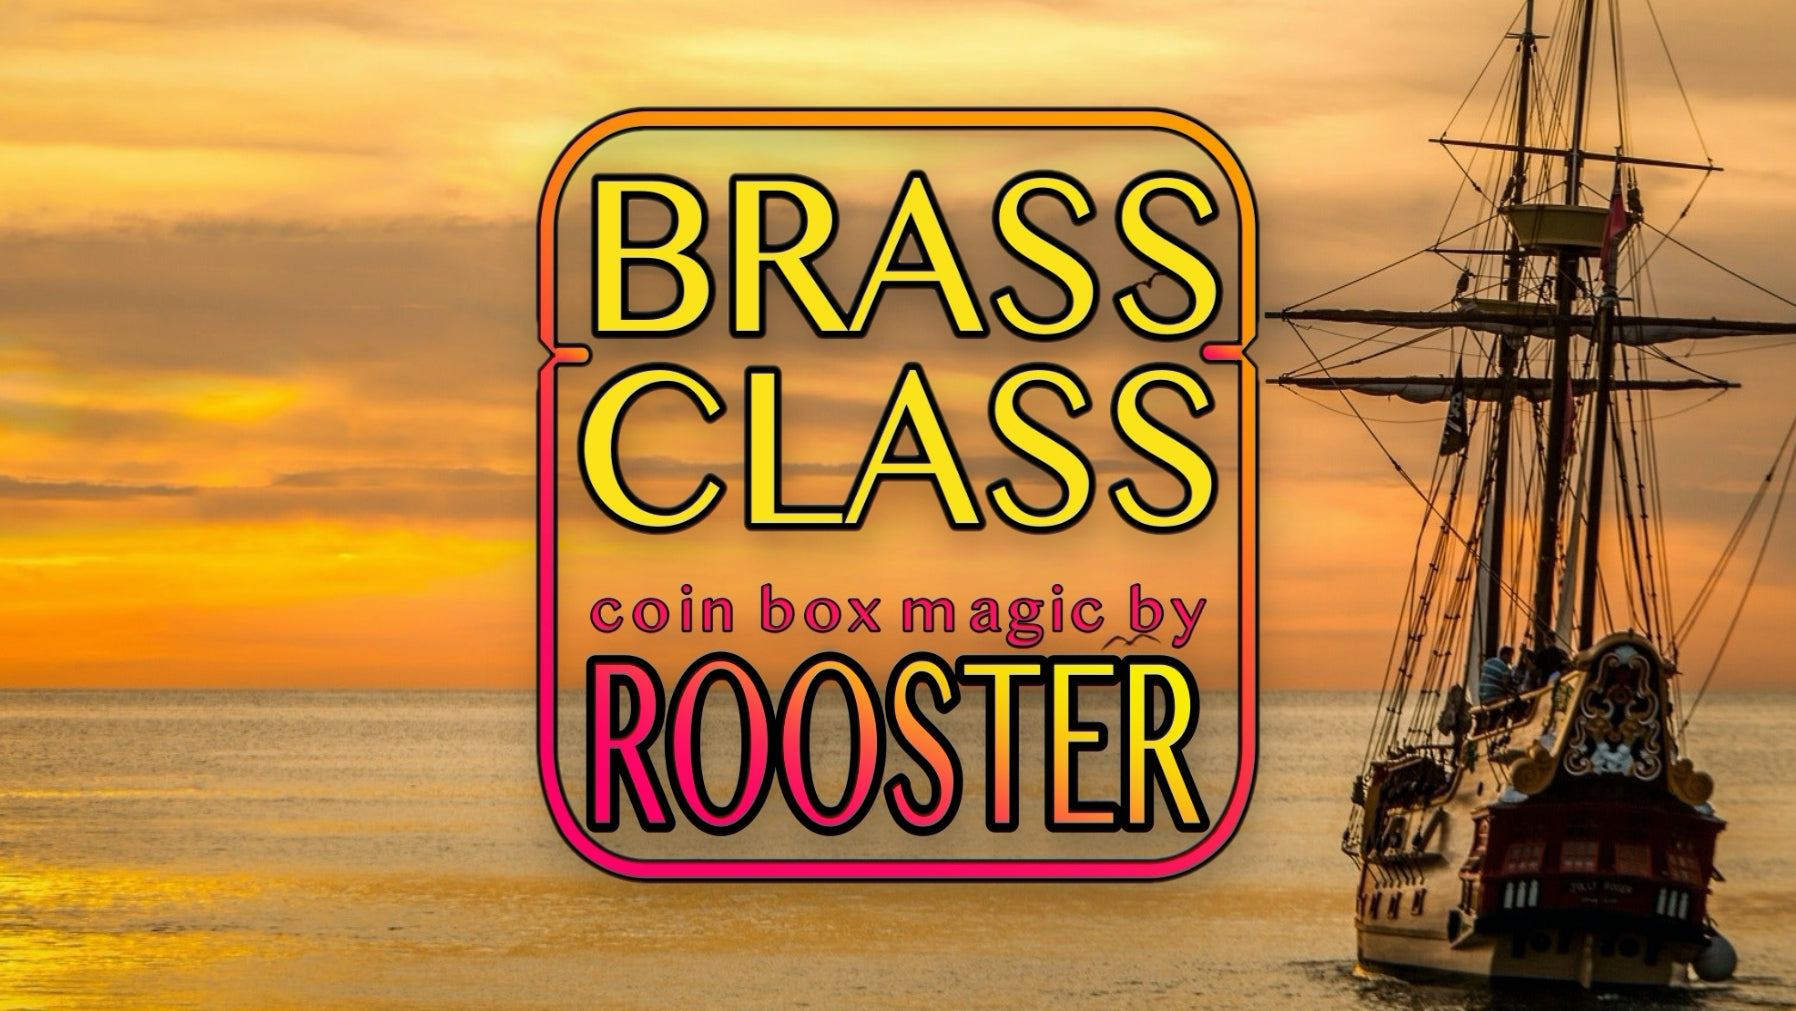 BRASS CLASS. Rooster teaches coin box magic – Copeland